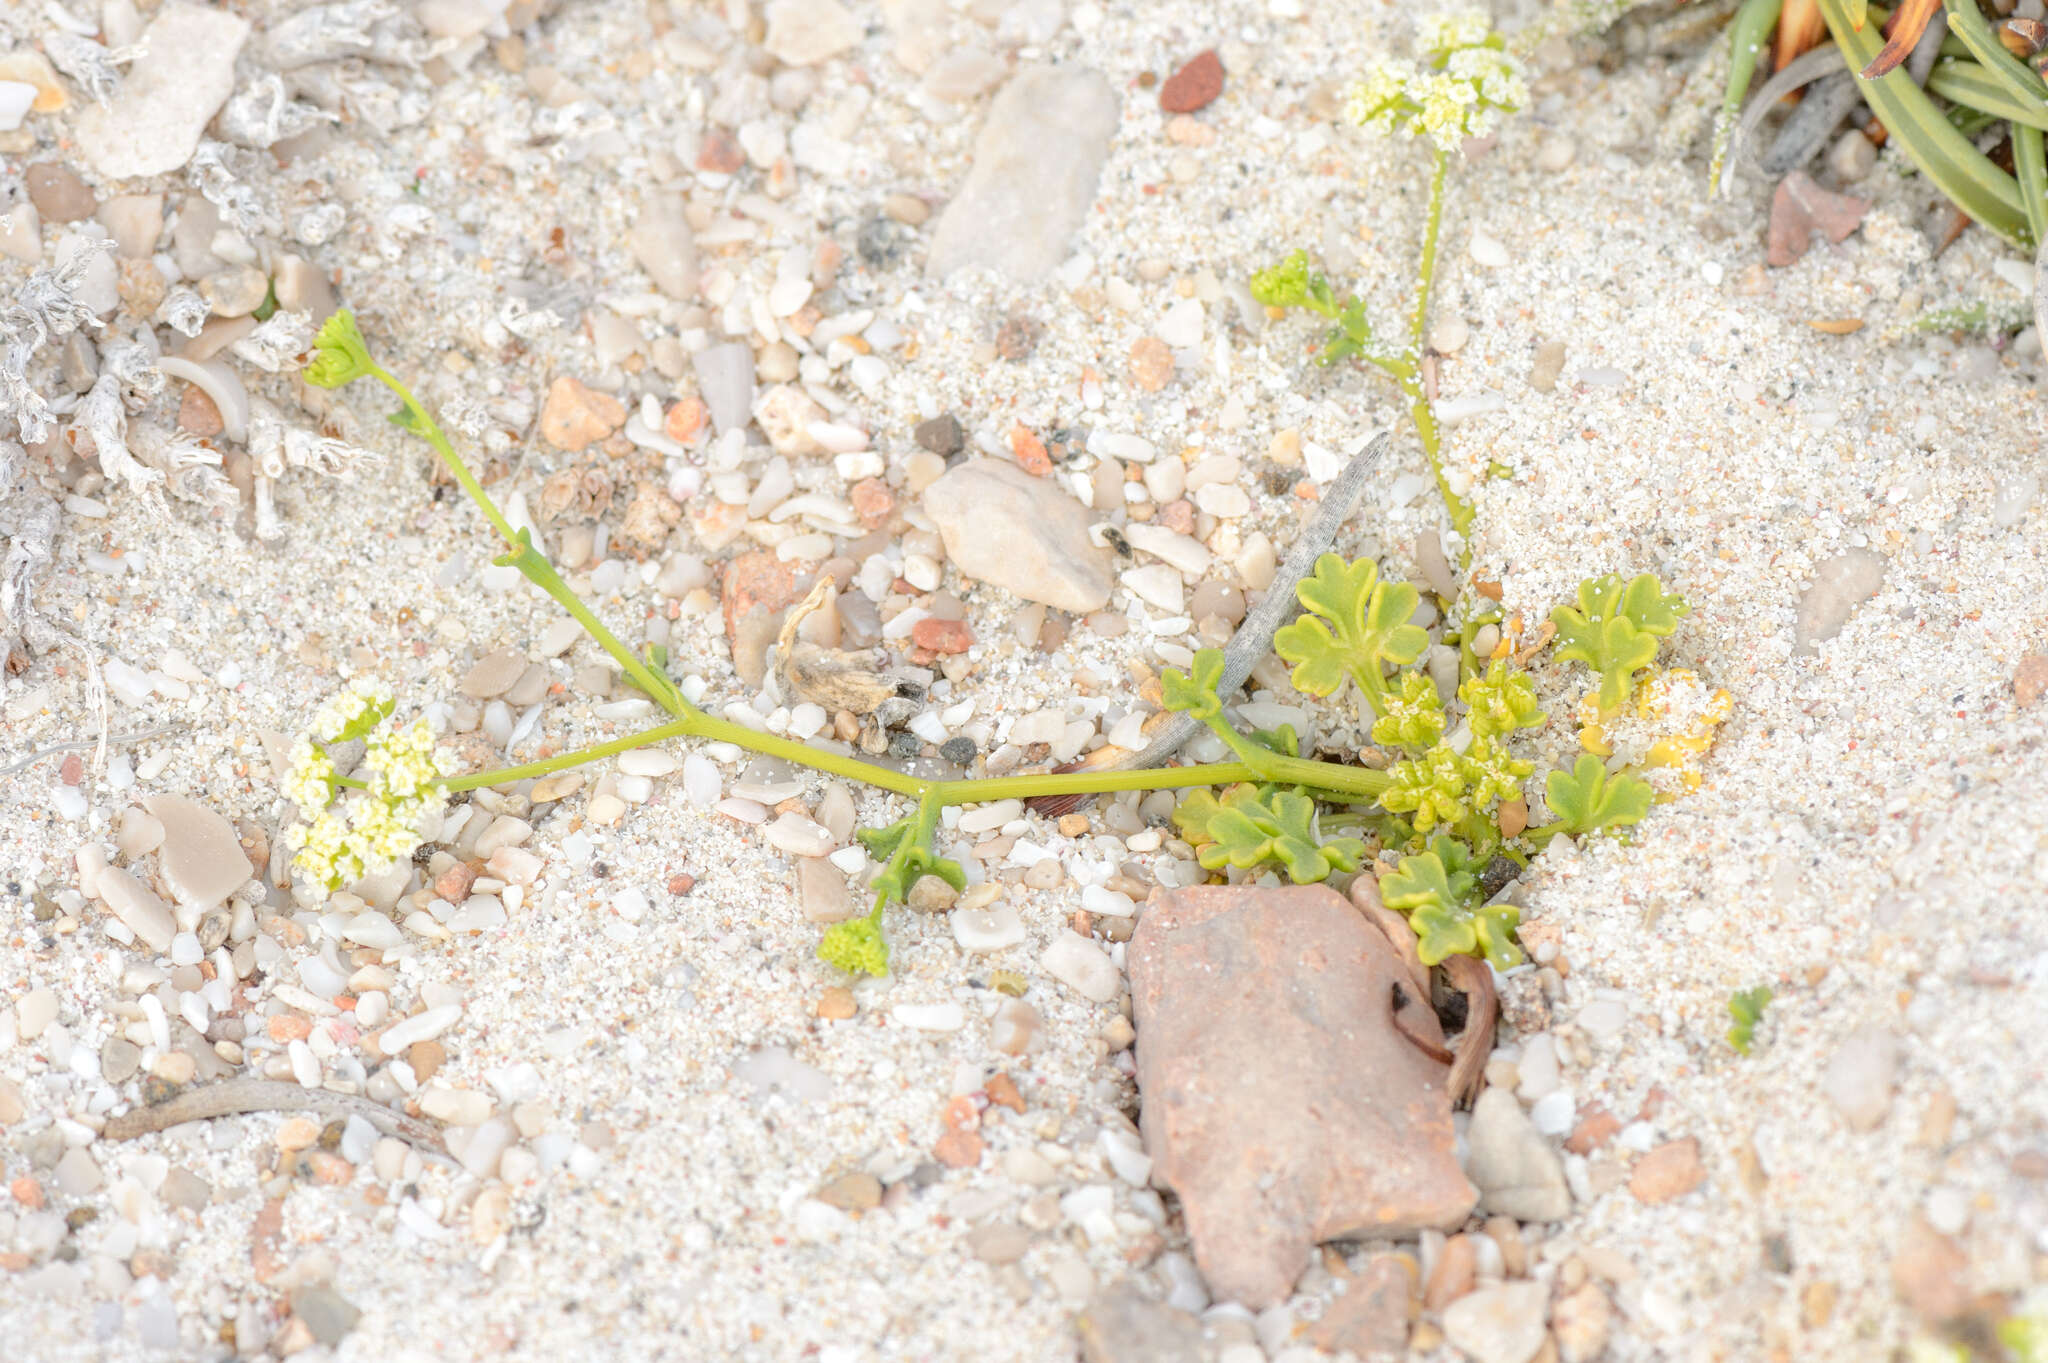 Image of Trachyspermum pimpinelloides H. Wolff